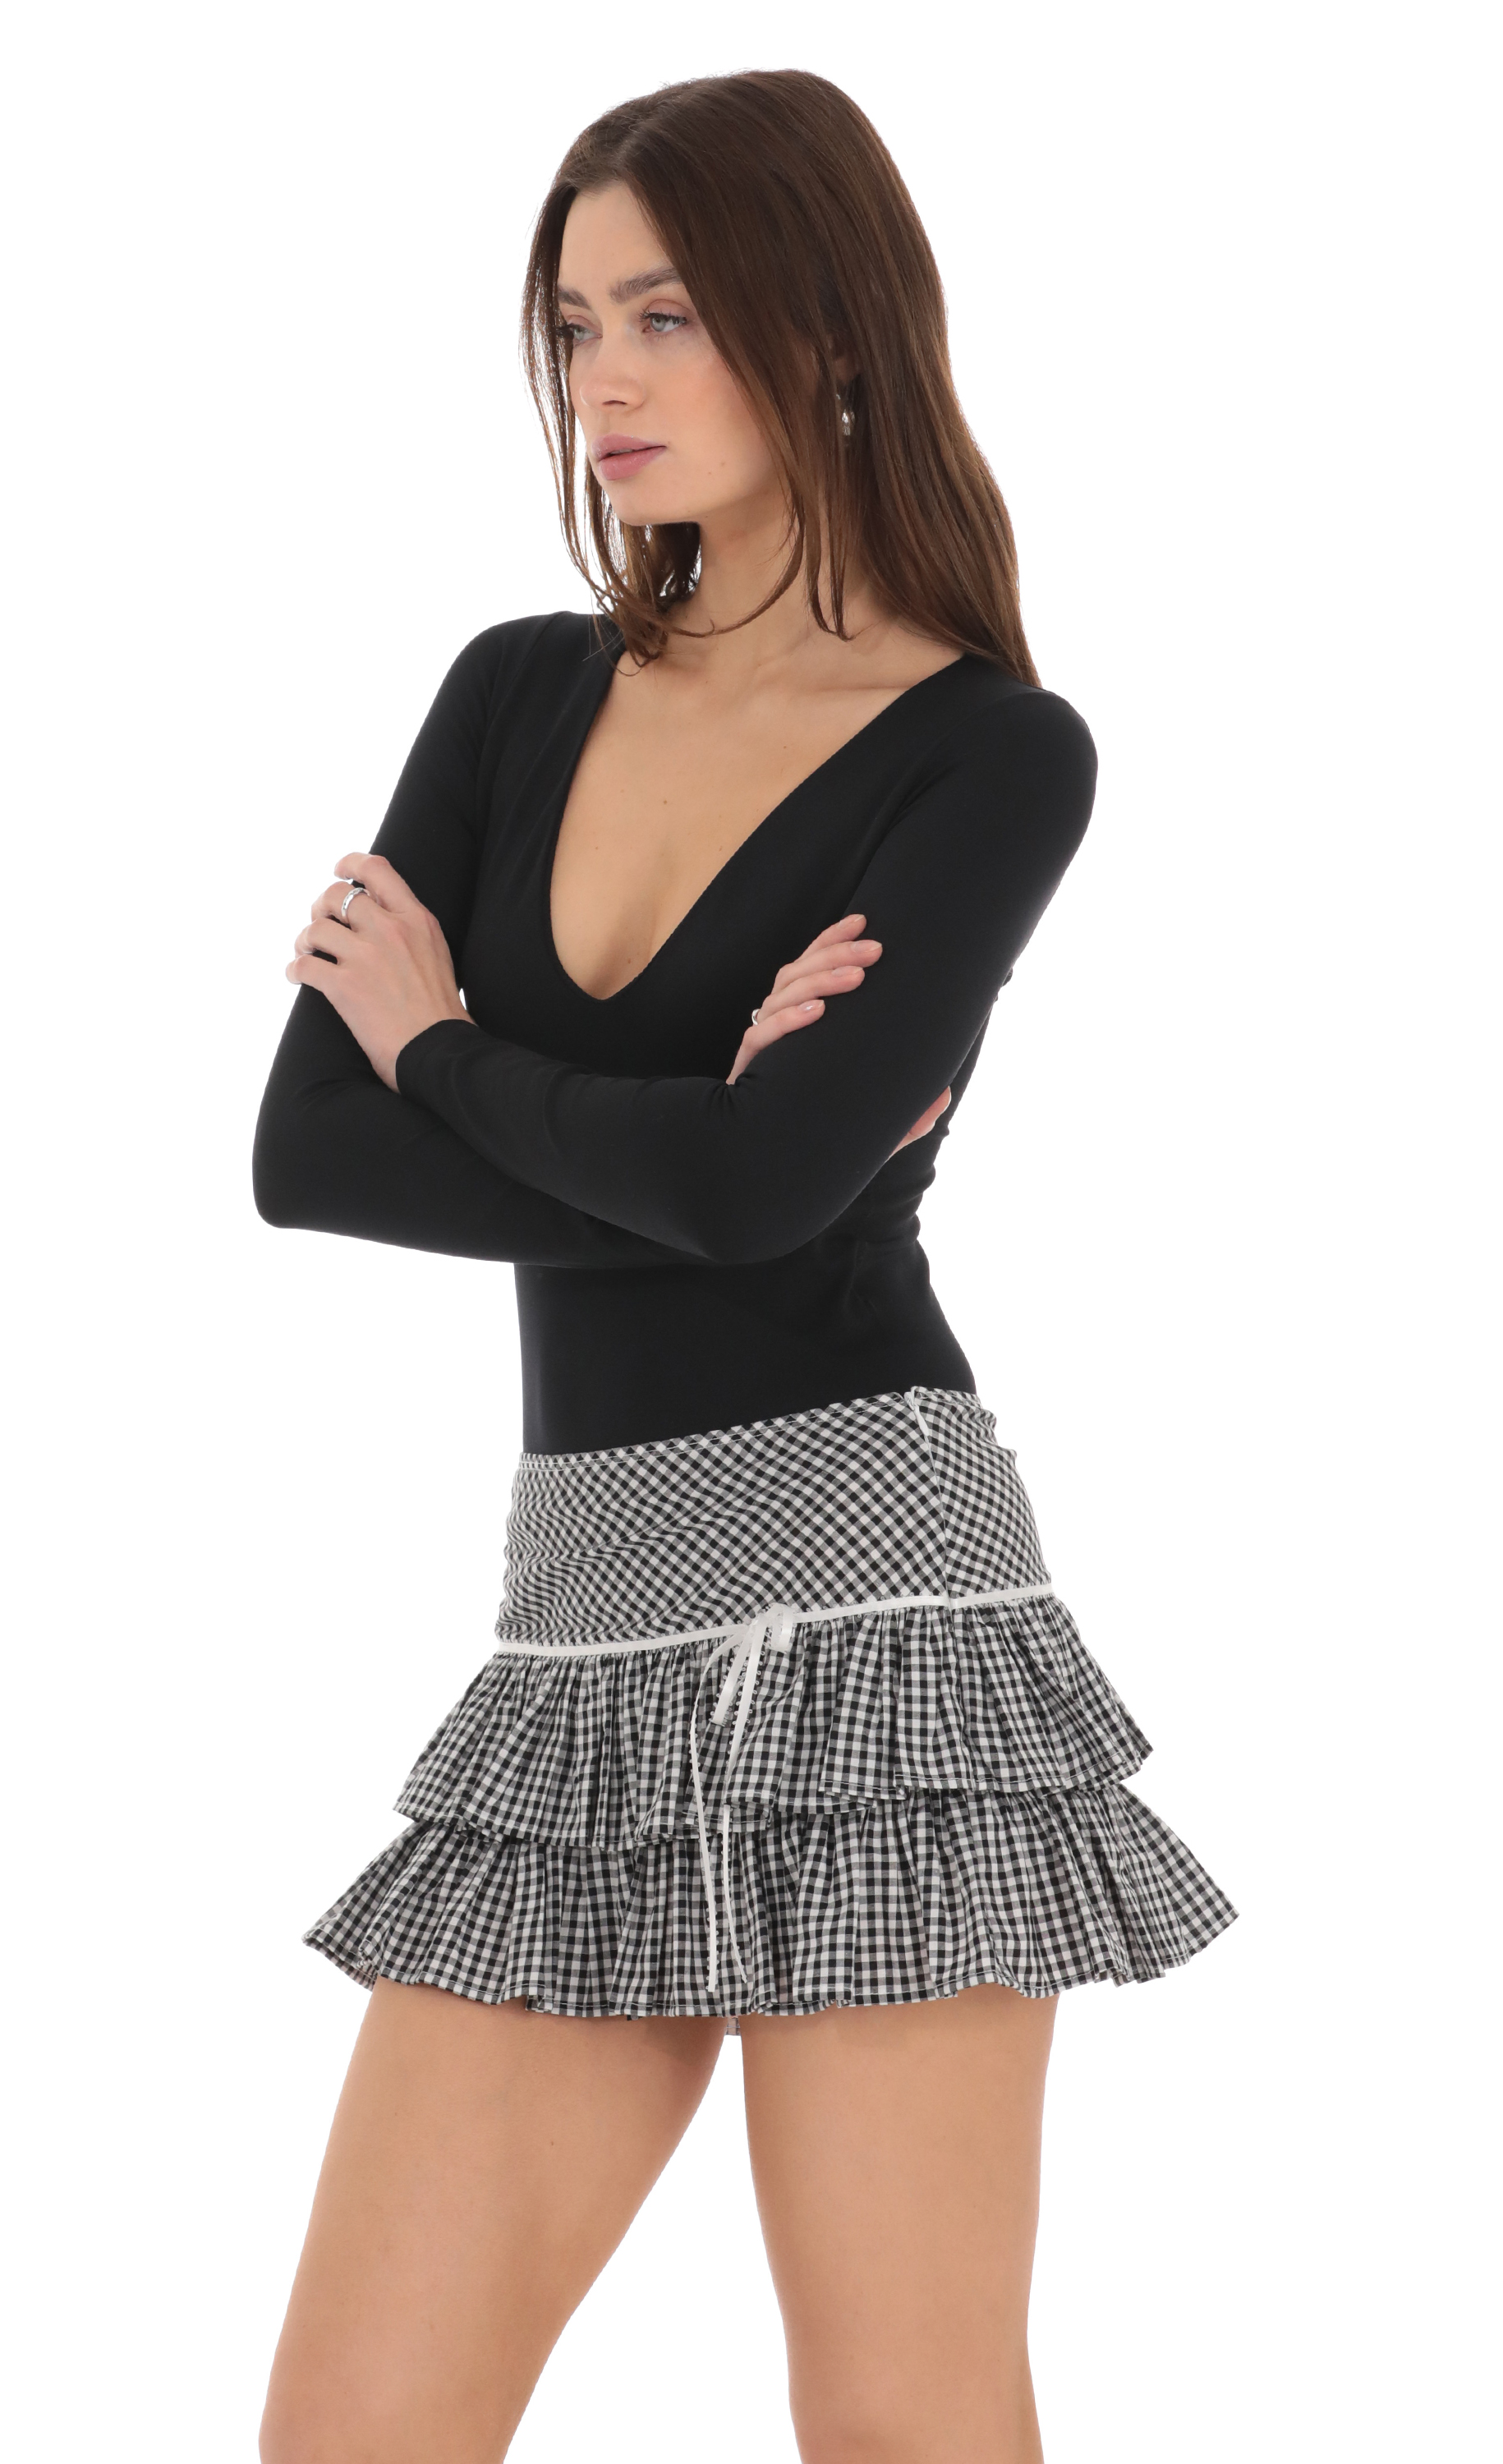 Gingham Ruffle Skirt in Black and White